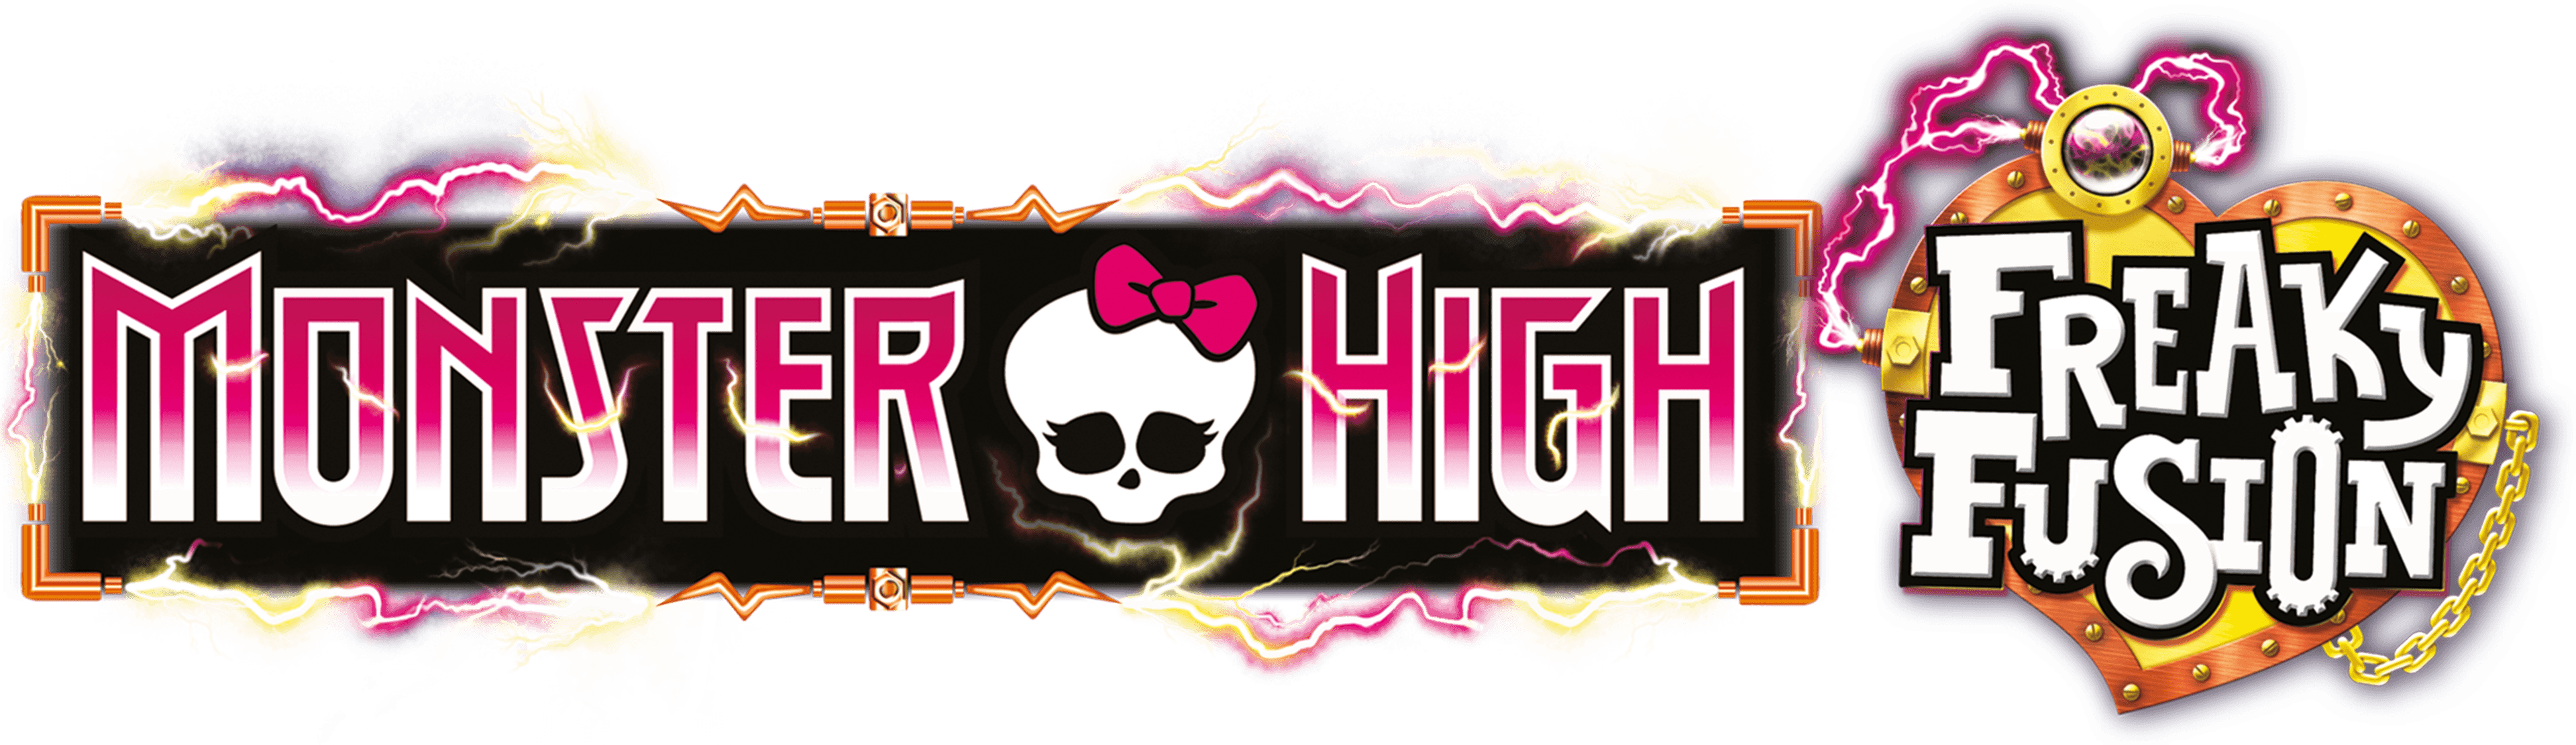 Monster High: Freaky Fusion logo